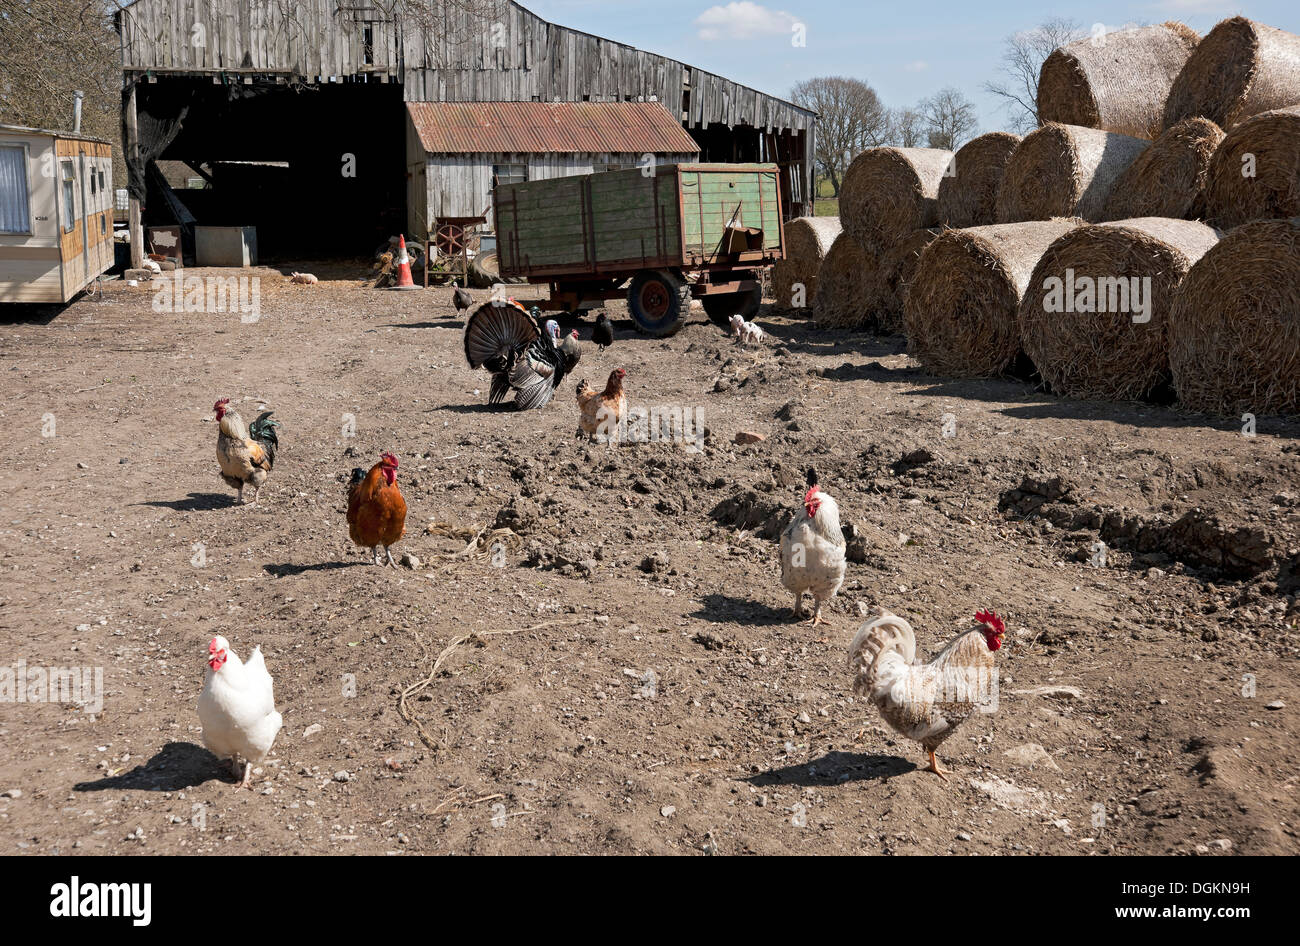 Chickens in a farmyard. Stock Photo